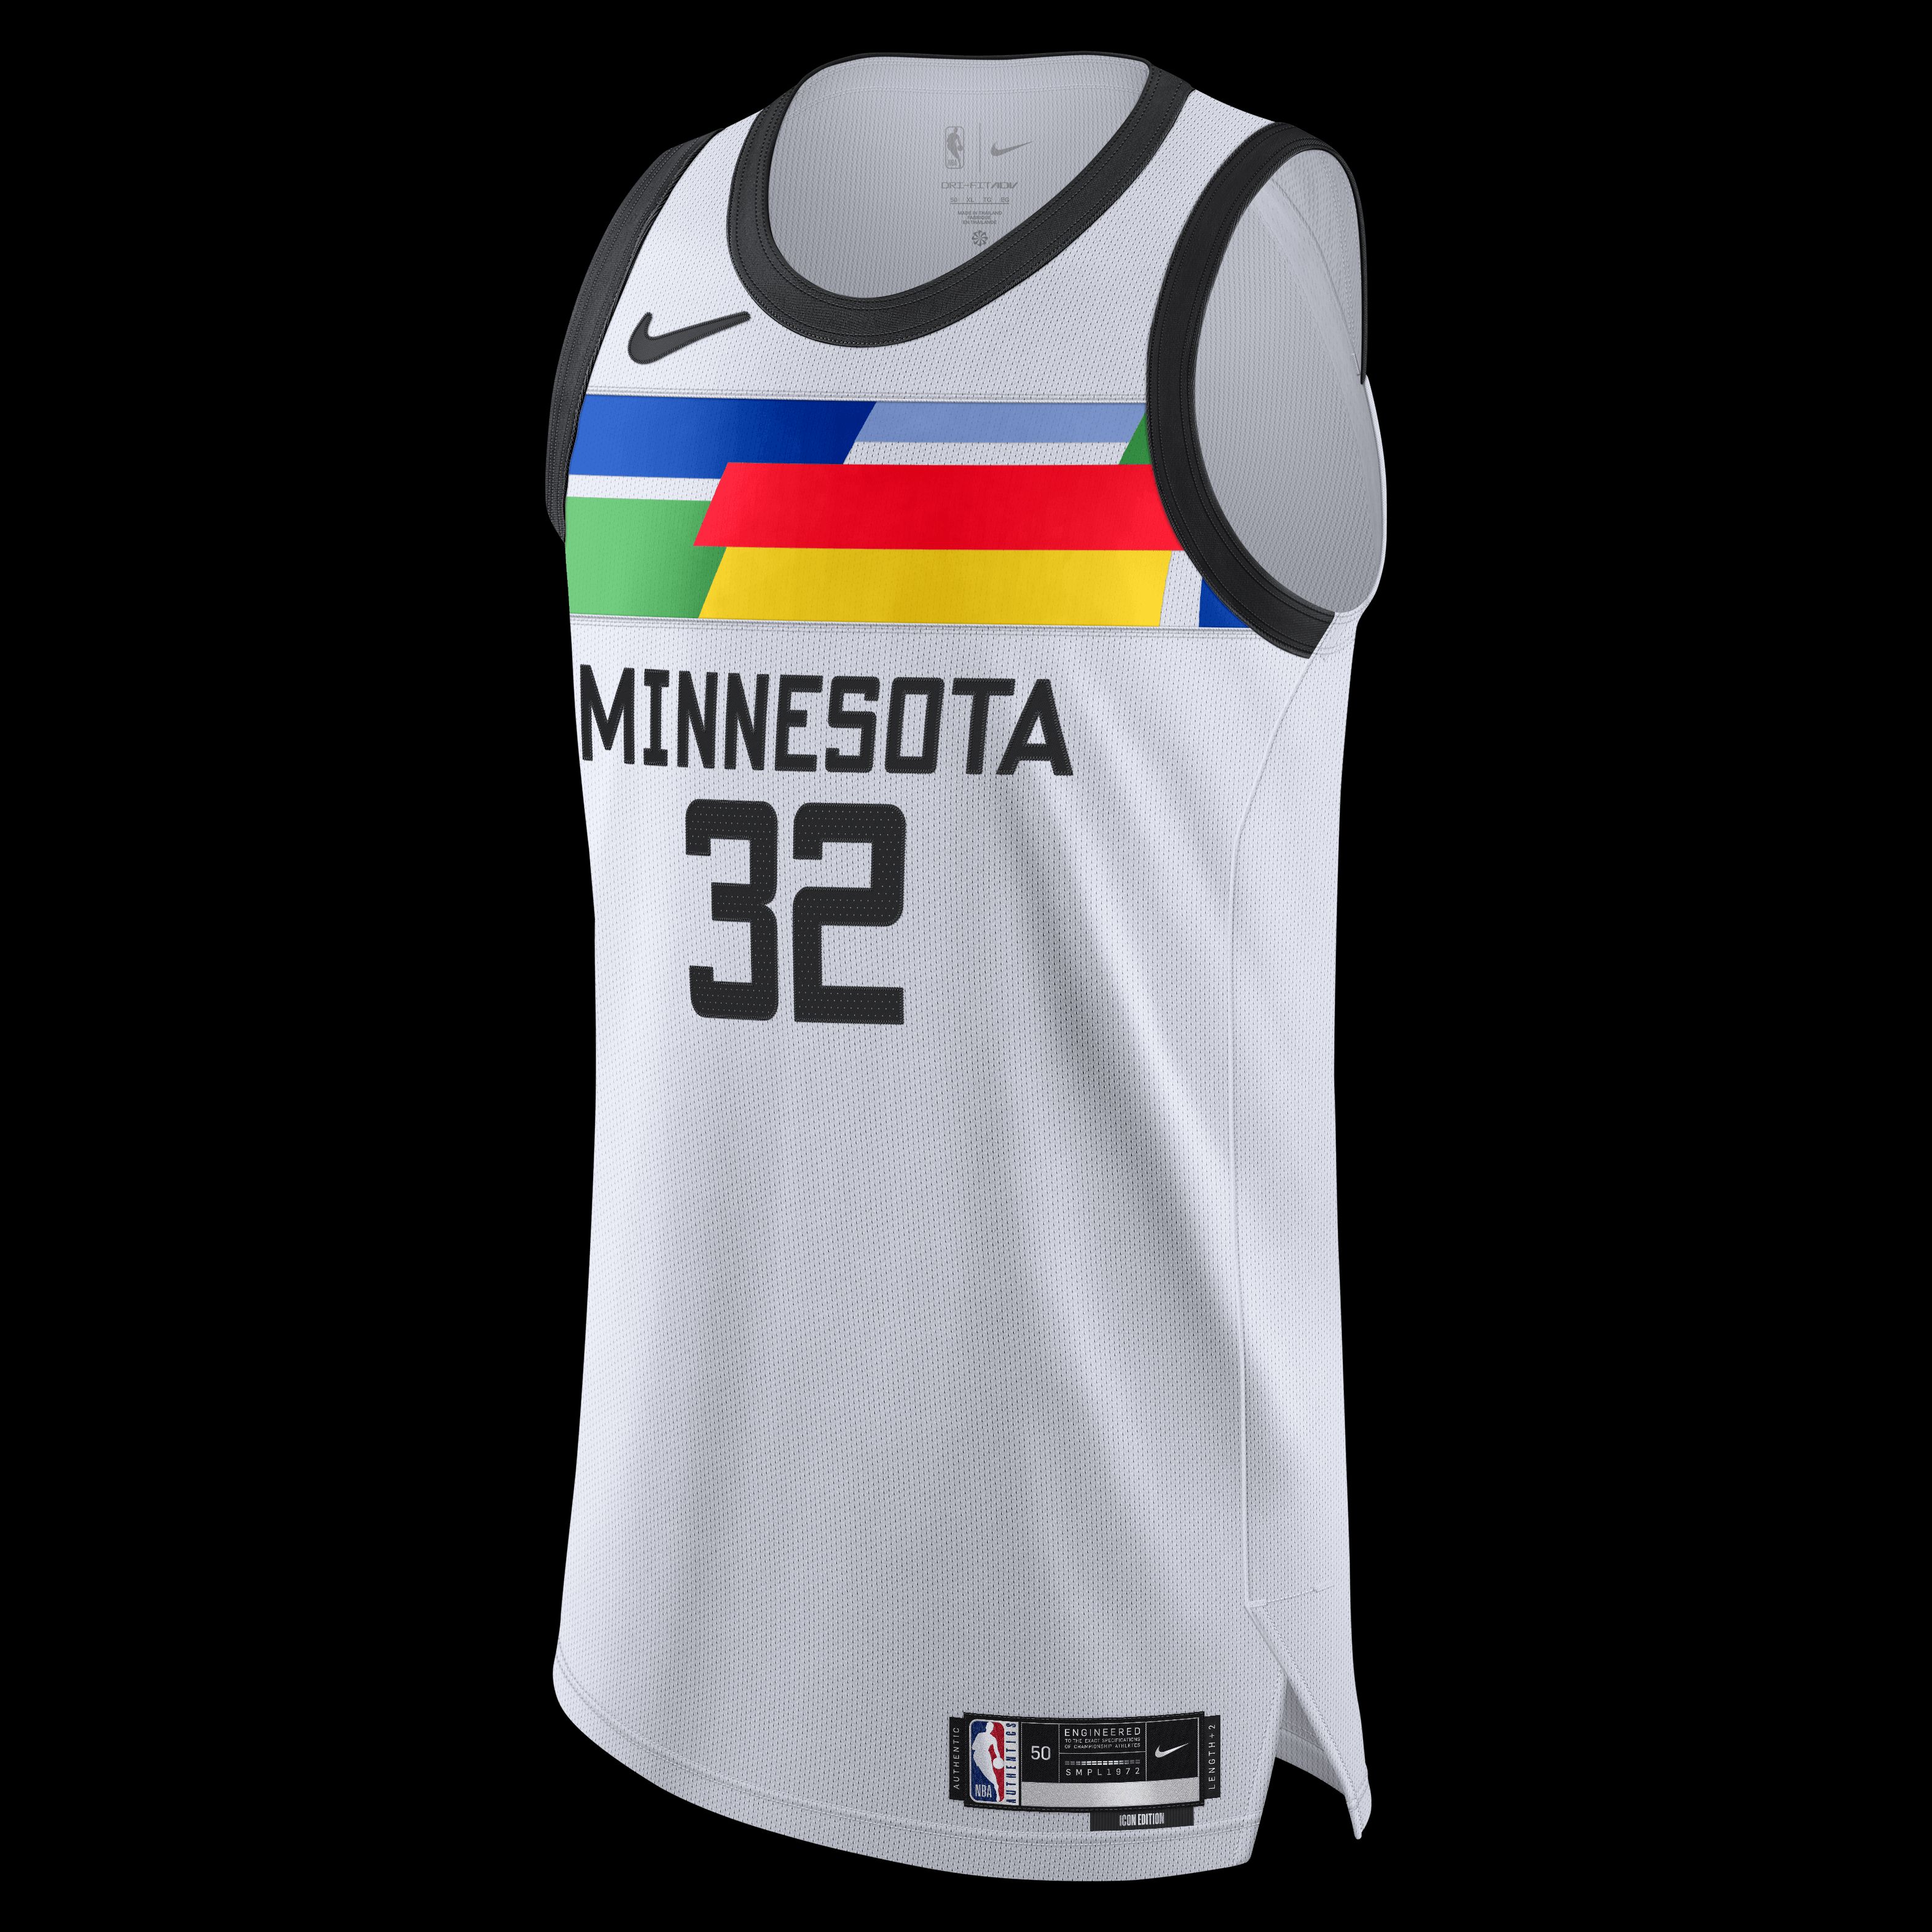 Minnesota Timberwolves release new 'city edition' uniforms